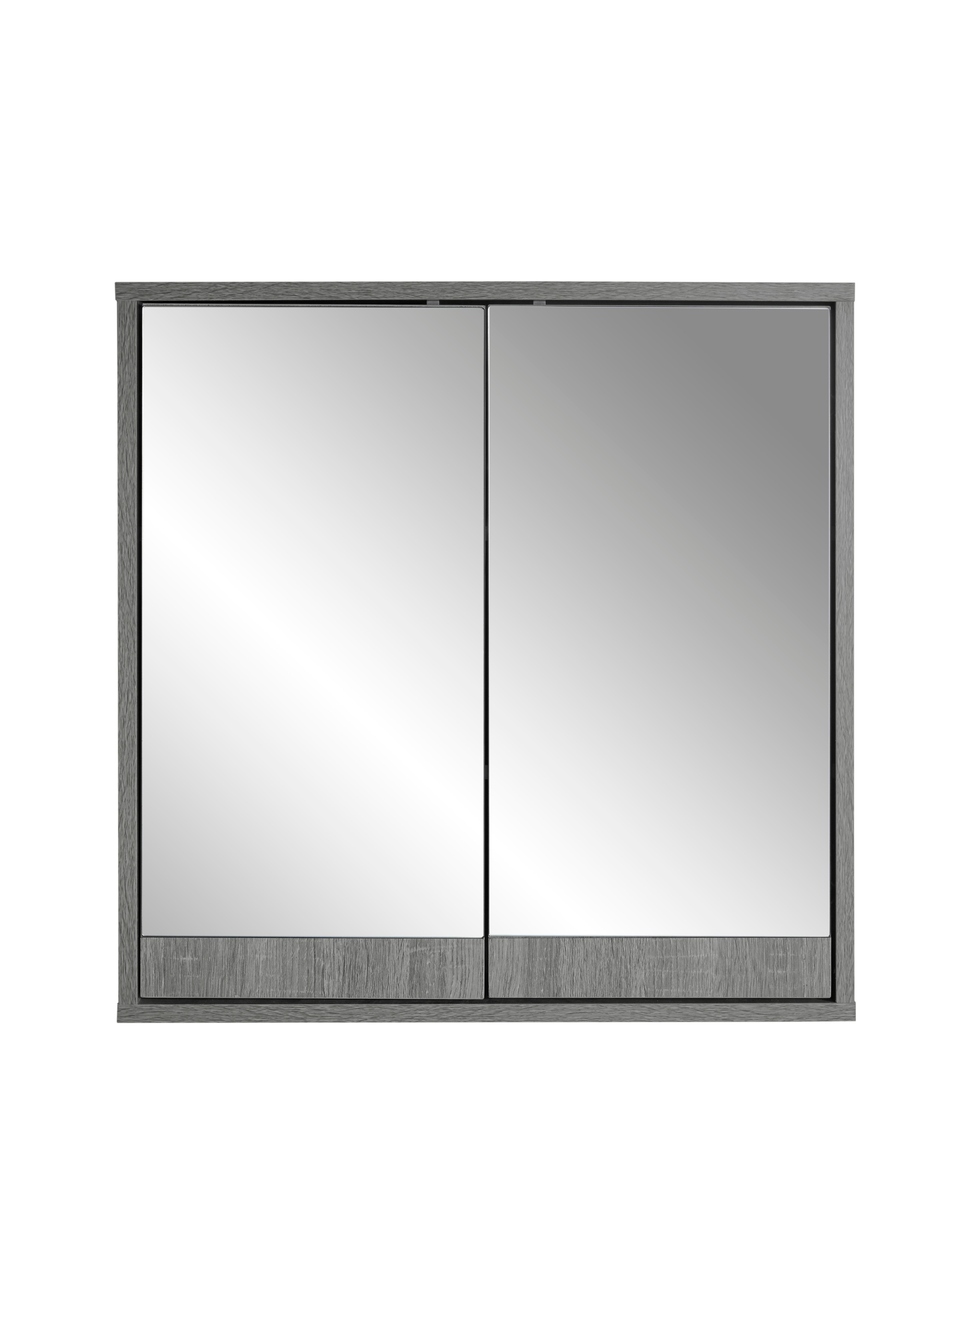 Lloyd Pascal Castleton Double Mirror Cabinet Grey (60cm x 60cm x 15cm)